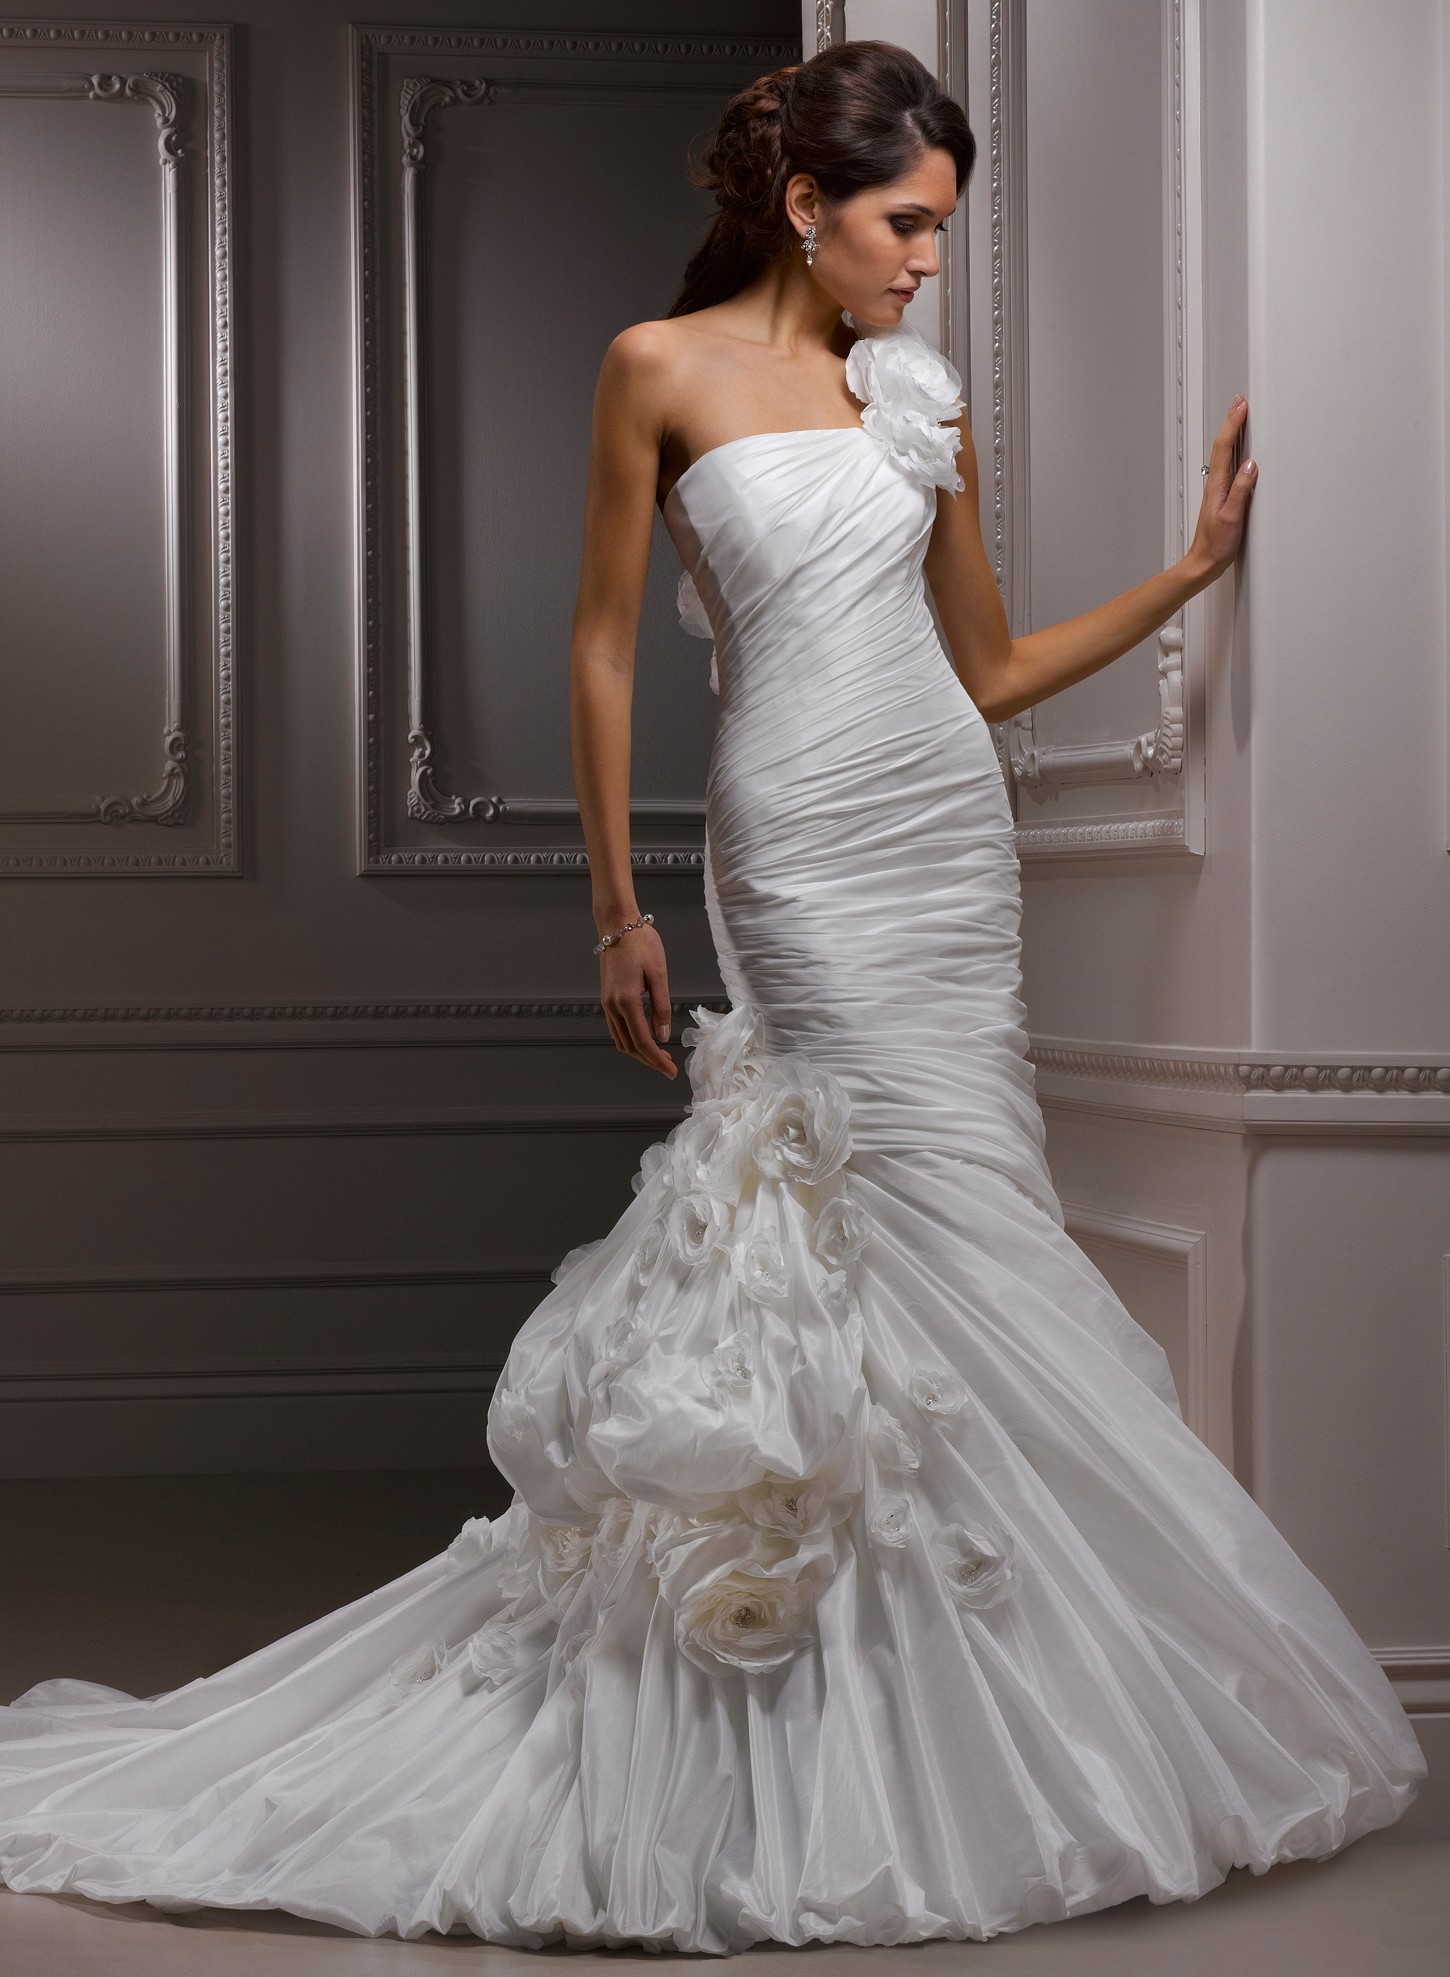 Mermaid Wedding Dresses - An Elegant Choice For Brides